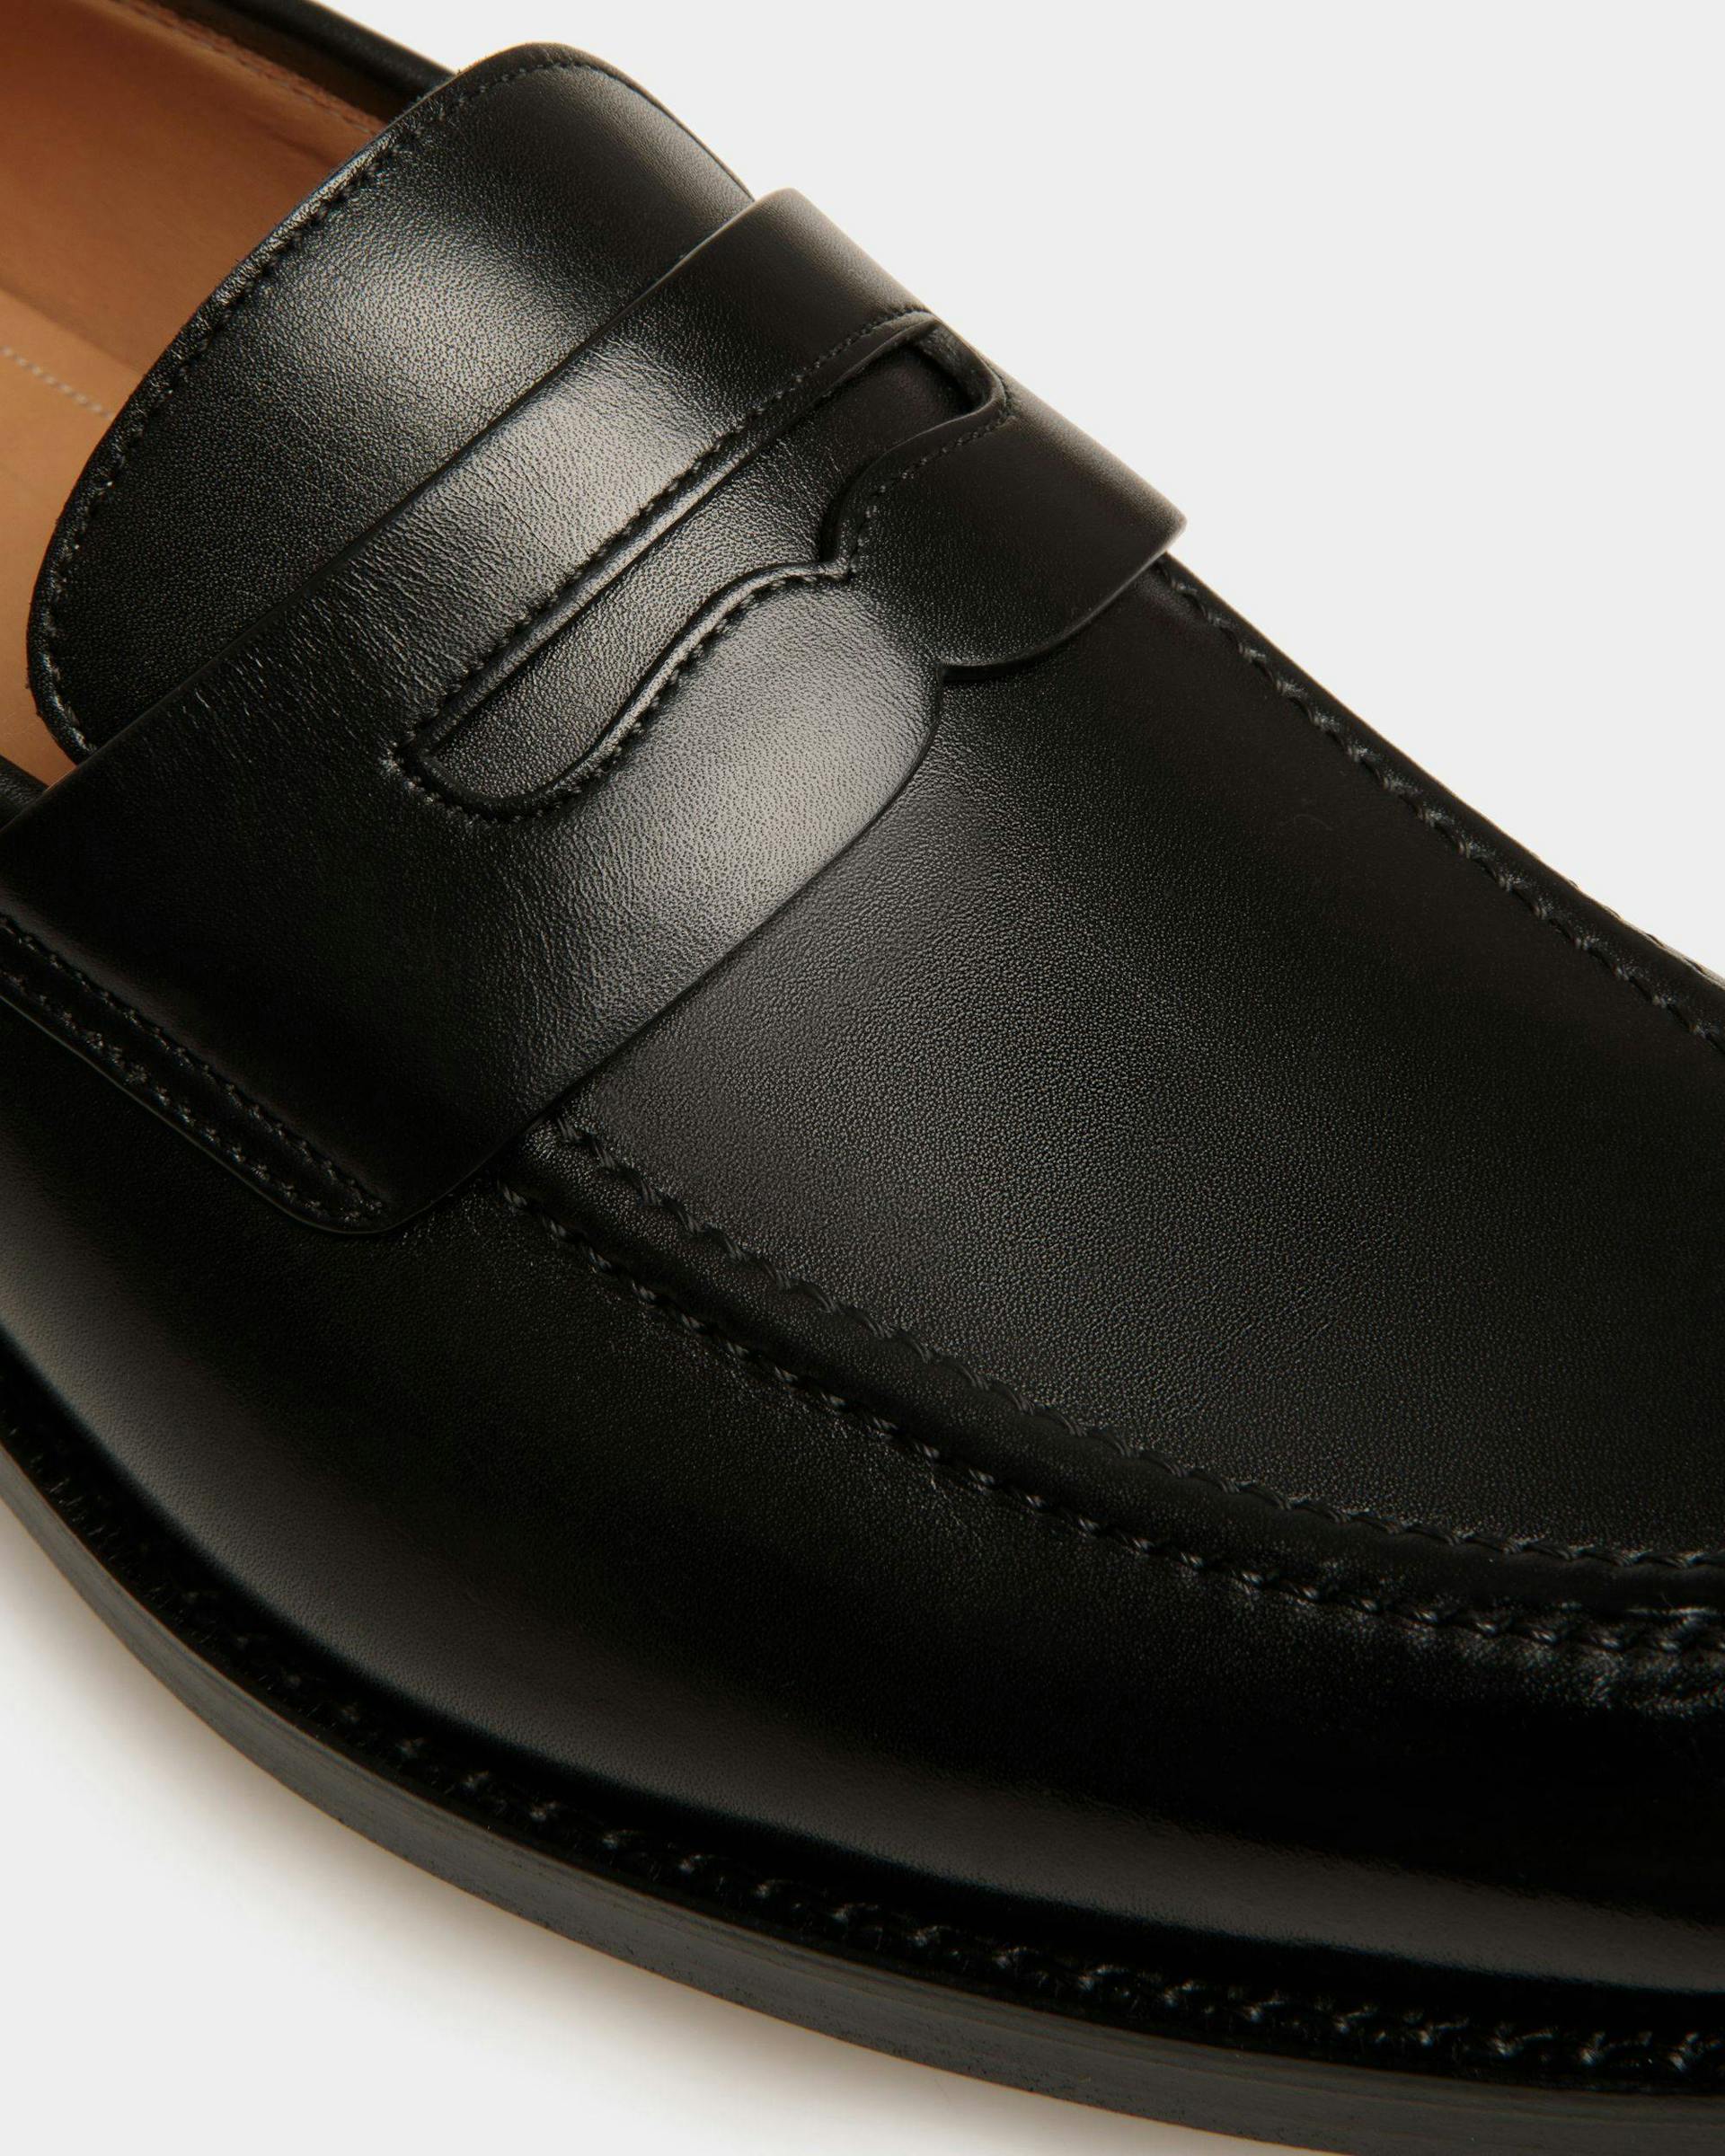 Men's Schoenen Loafer In Black Leather | Bally | Still Life Detail